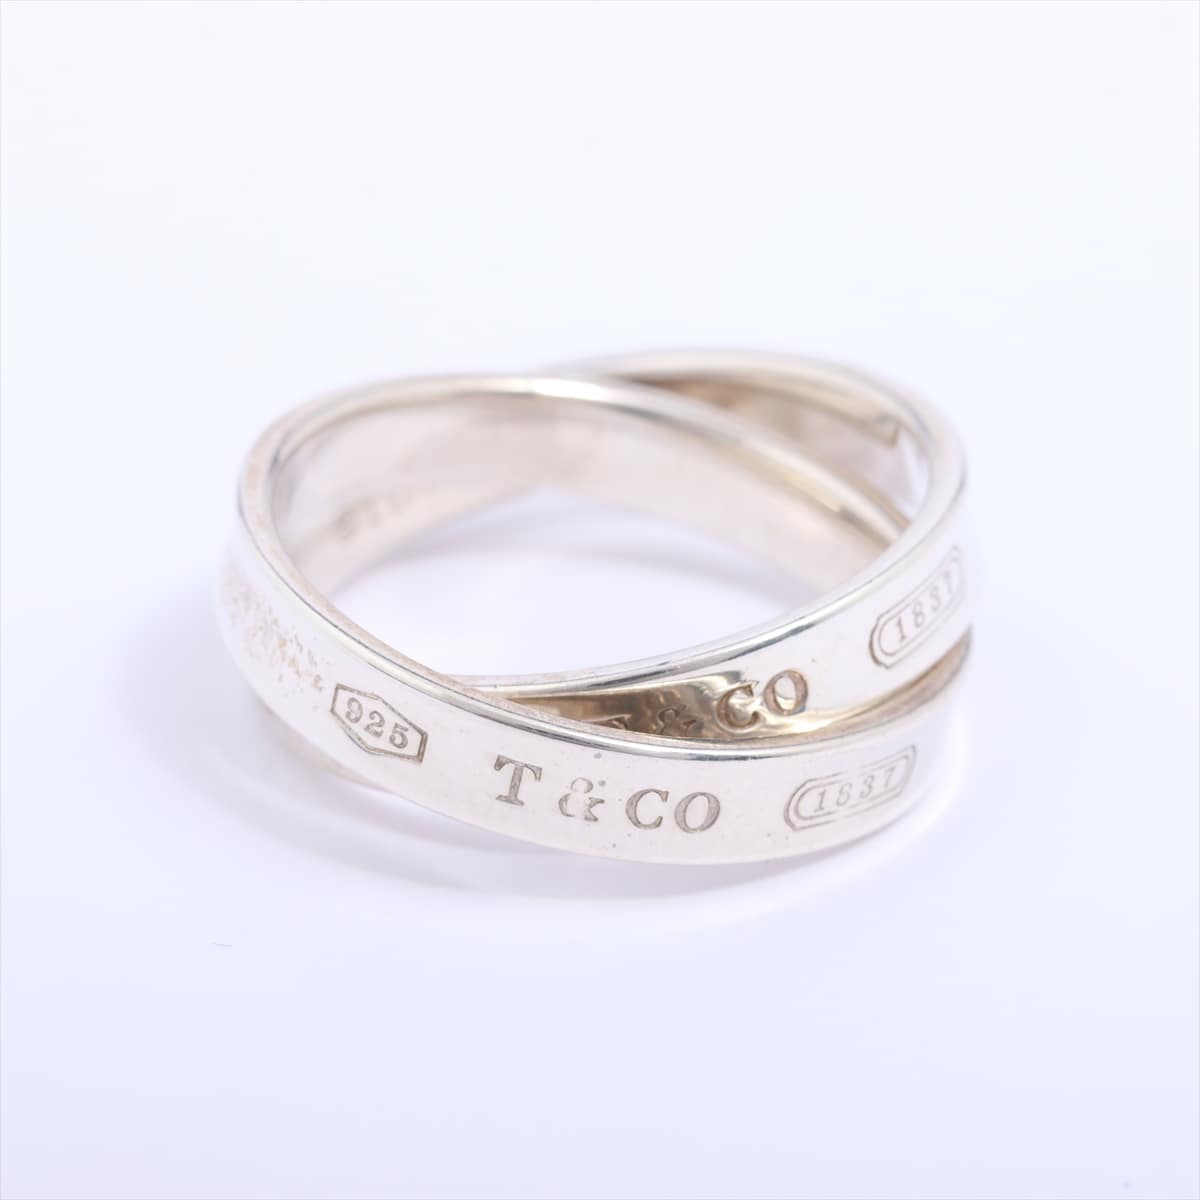 Tiffany 1837 Narrow rings 925 5.2g Silver